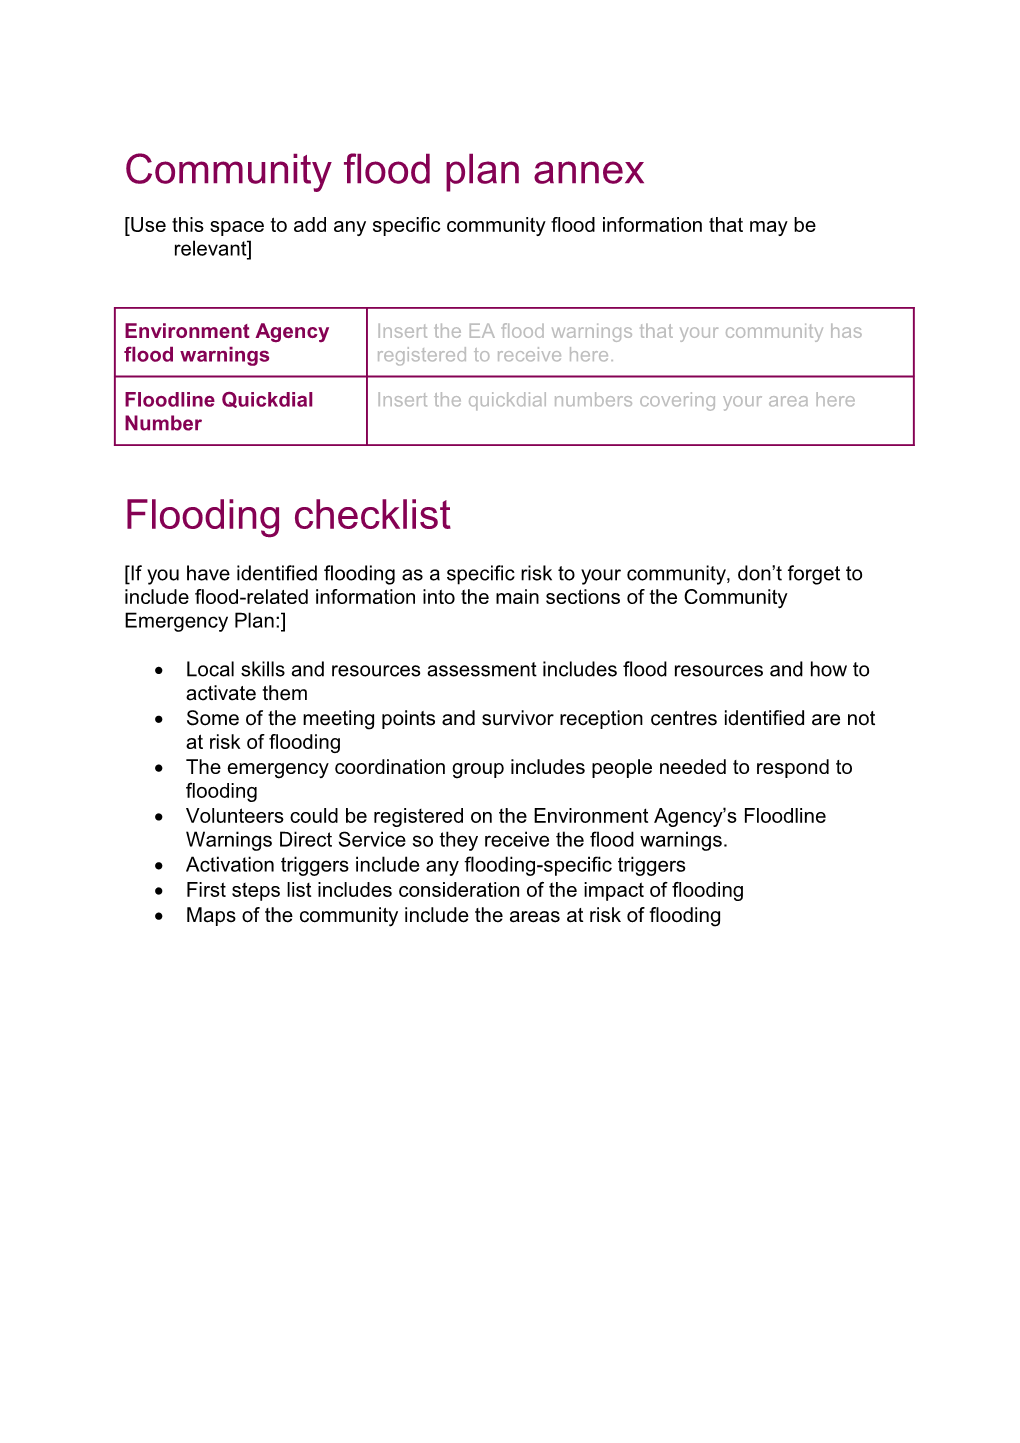 Community Flood Plan Annex